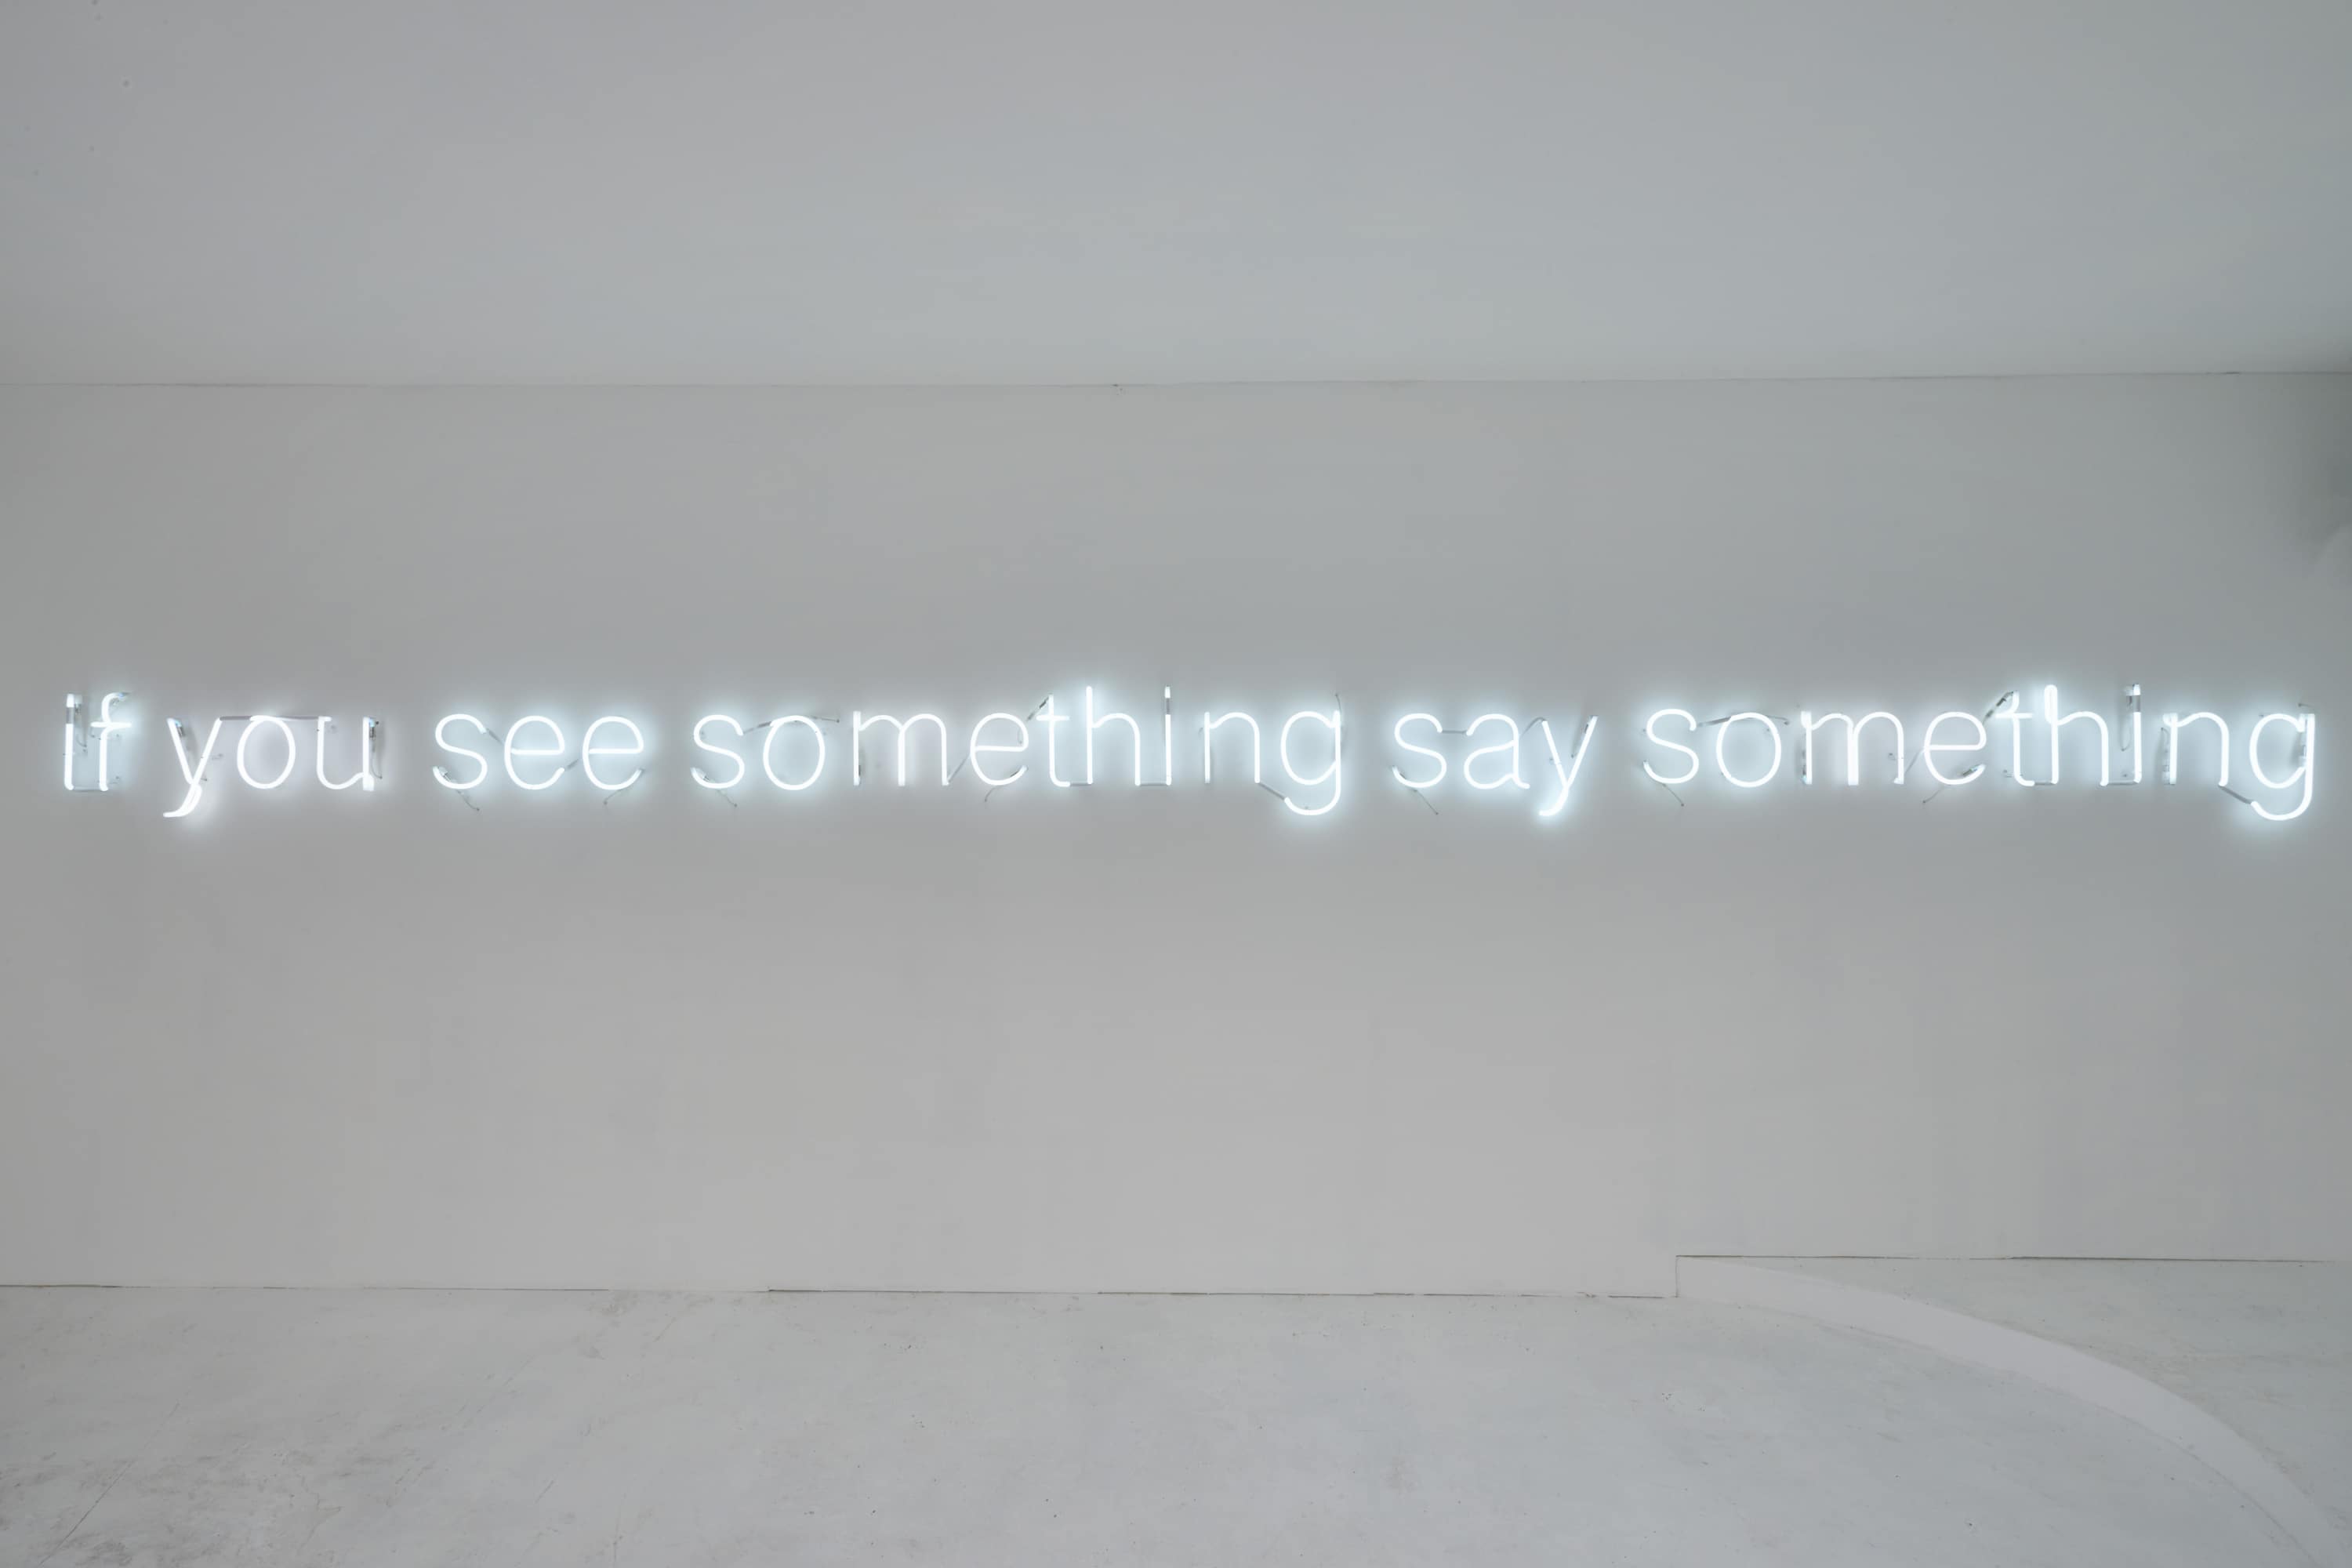 If you see something say something, 2015